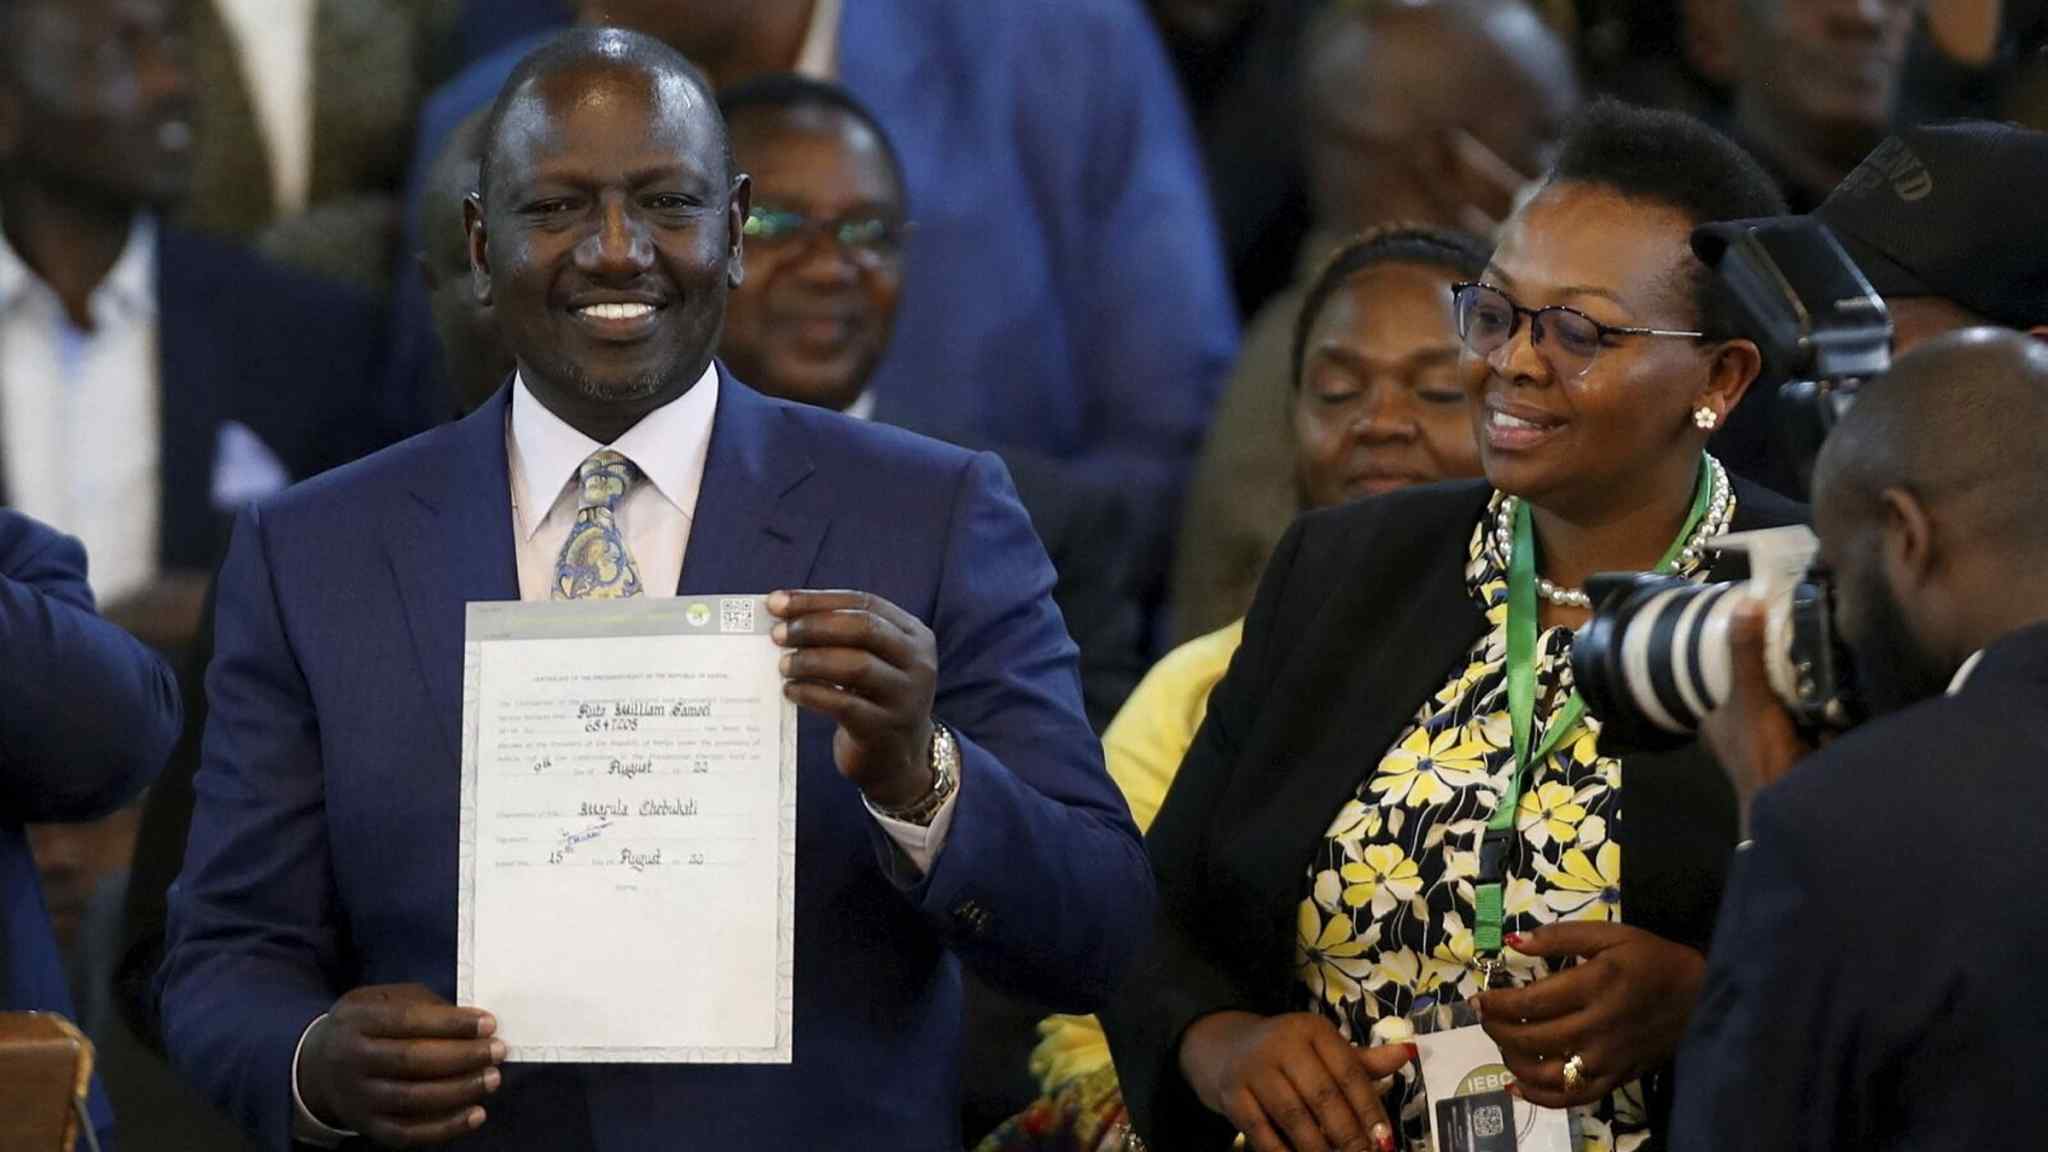 William Ruto wins Kenya’s presidential election amid dispute